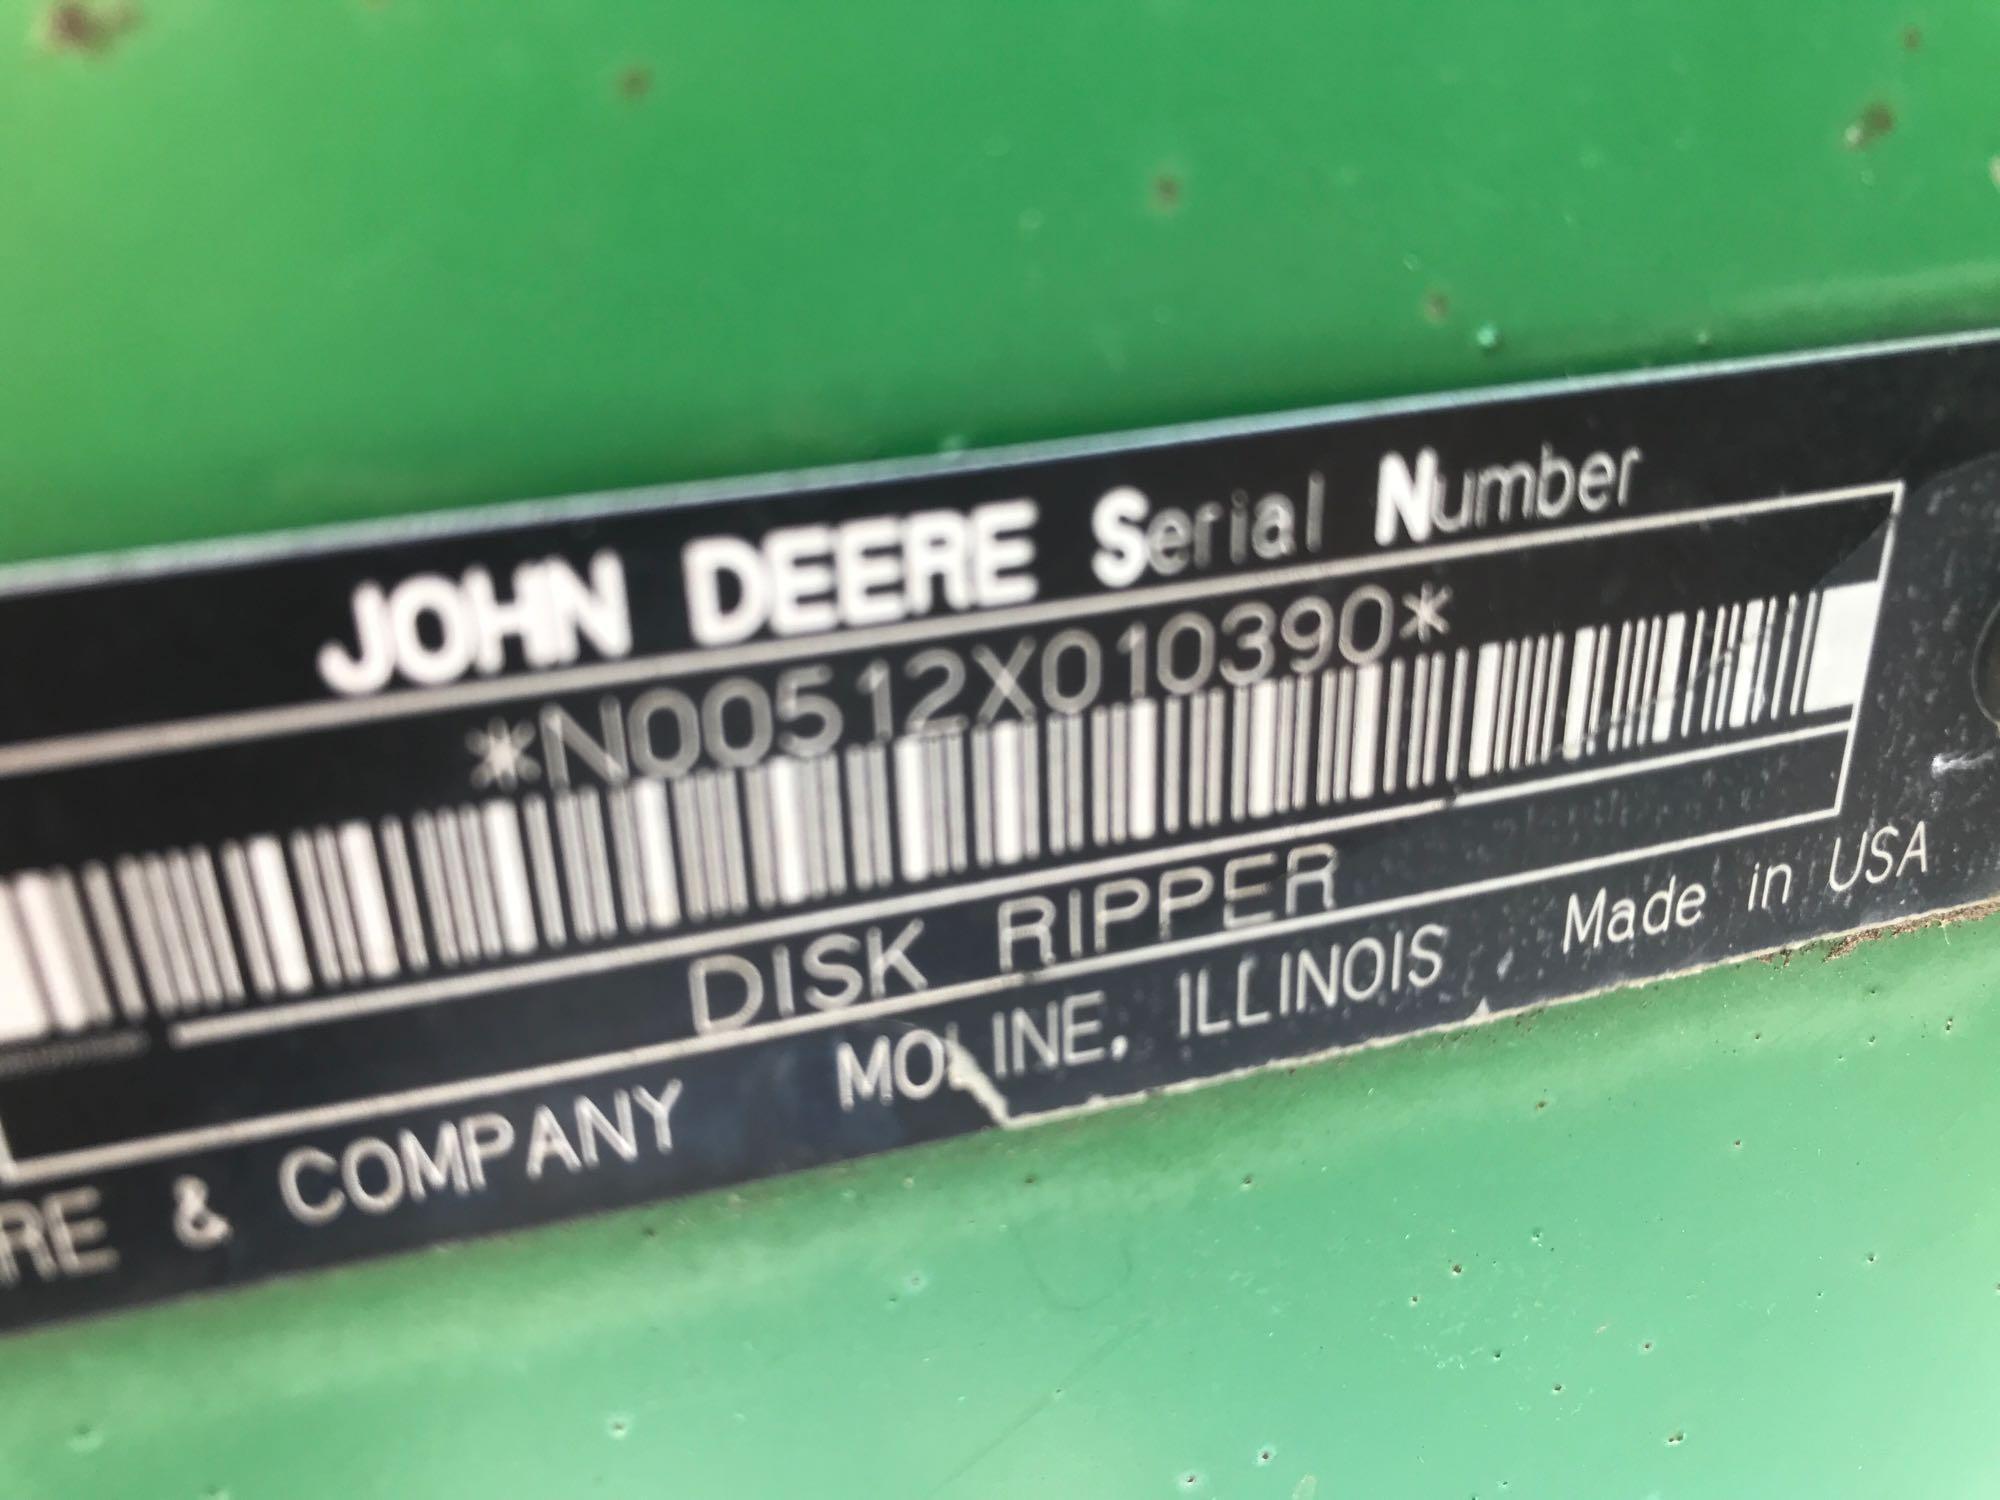 JD 512 7x30 Disc Ripper